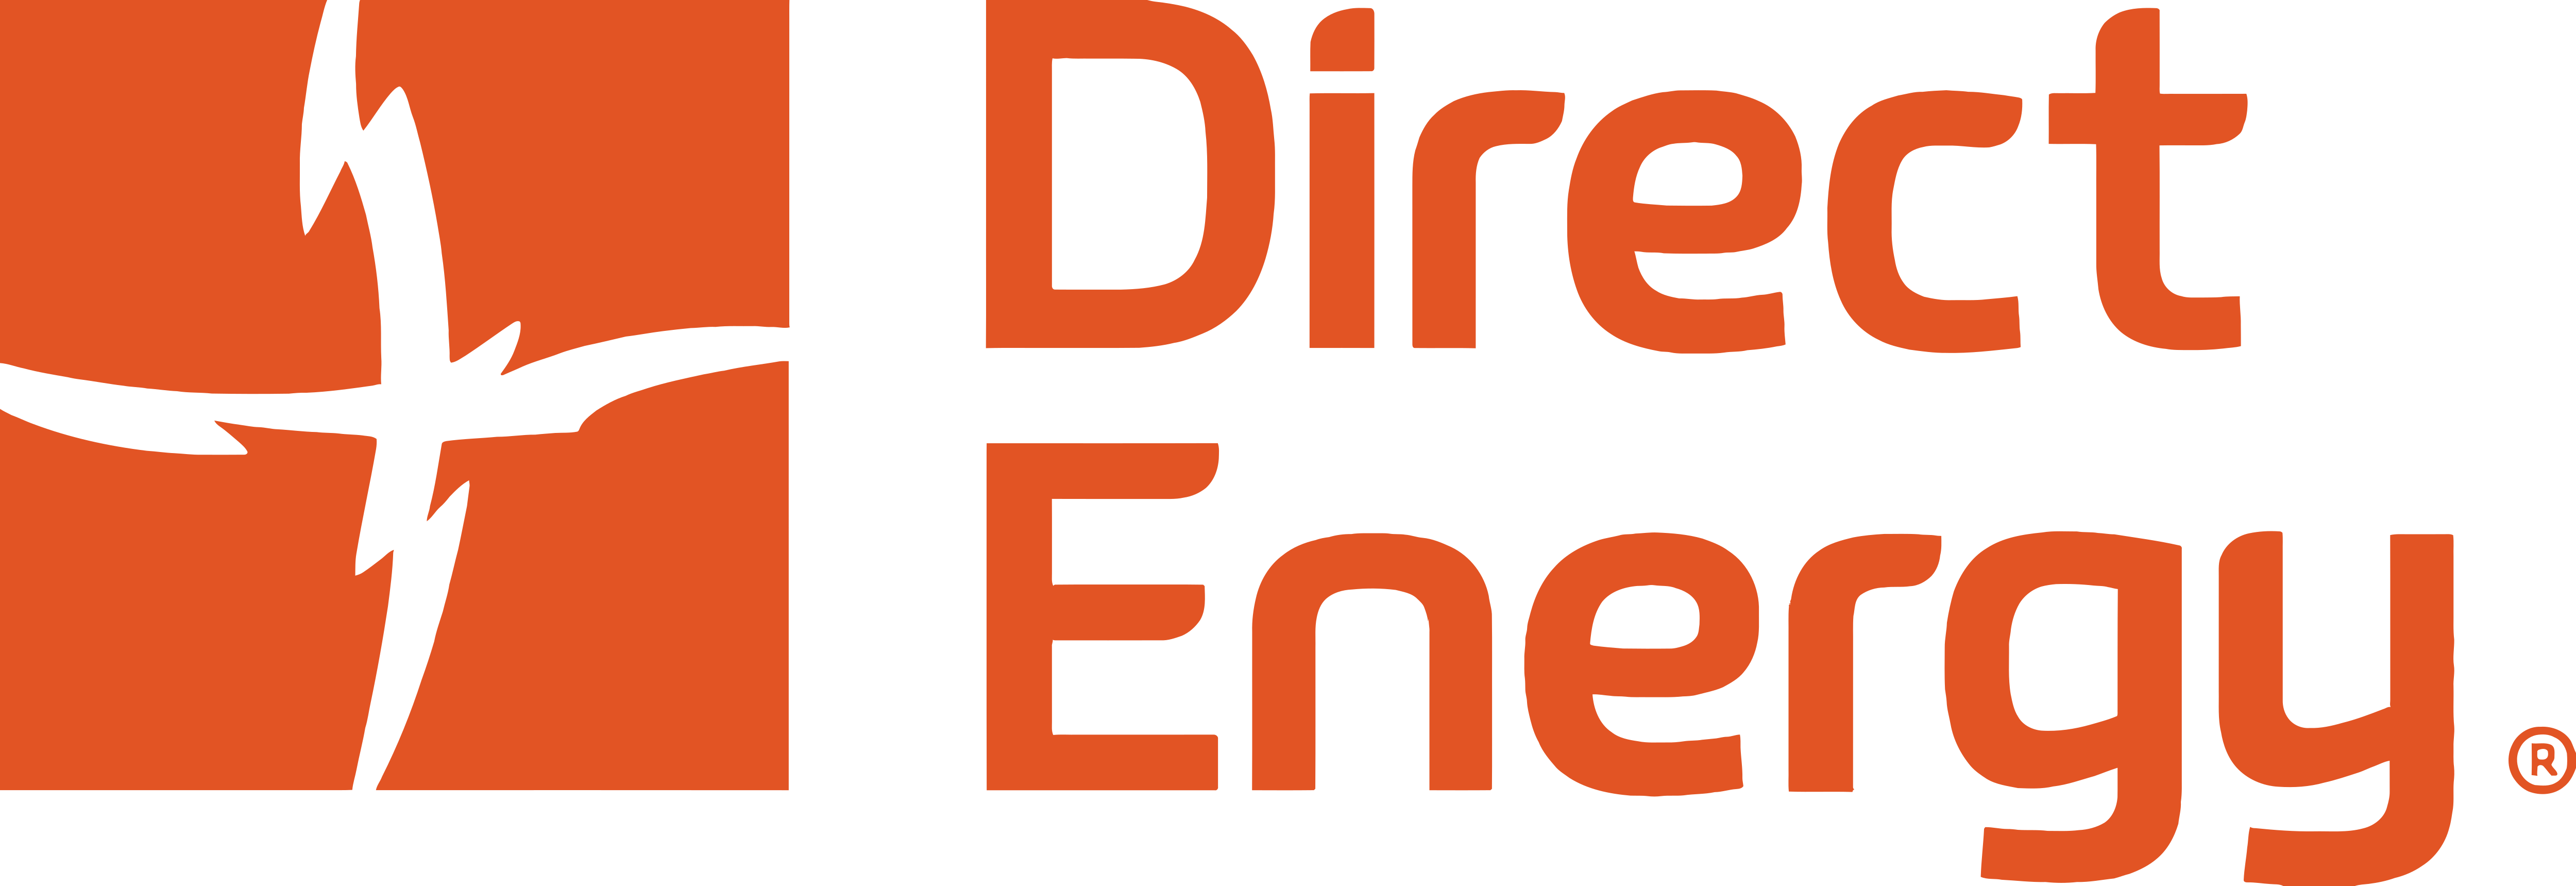 direct-energy-logos-download